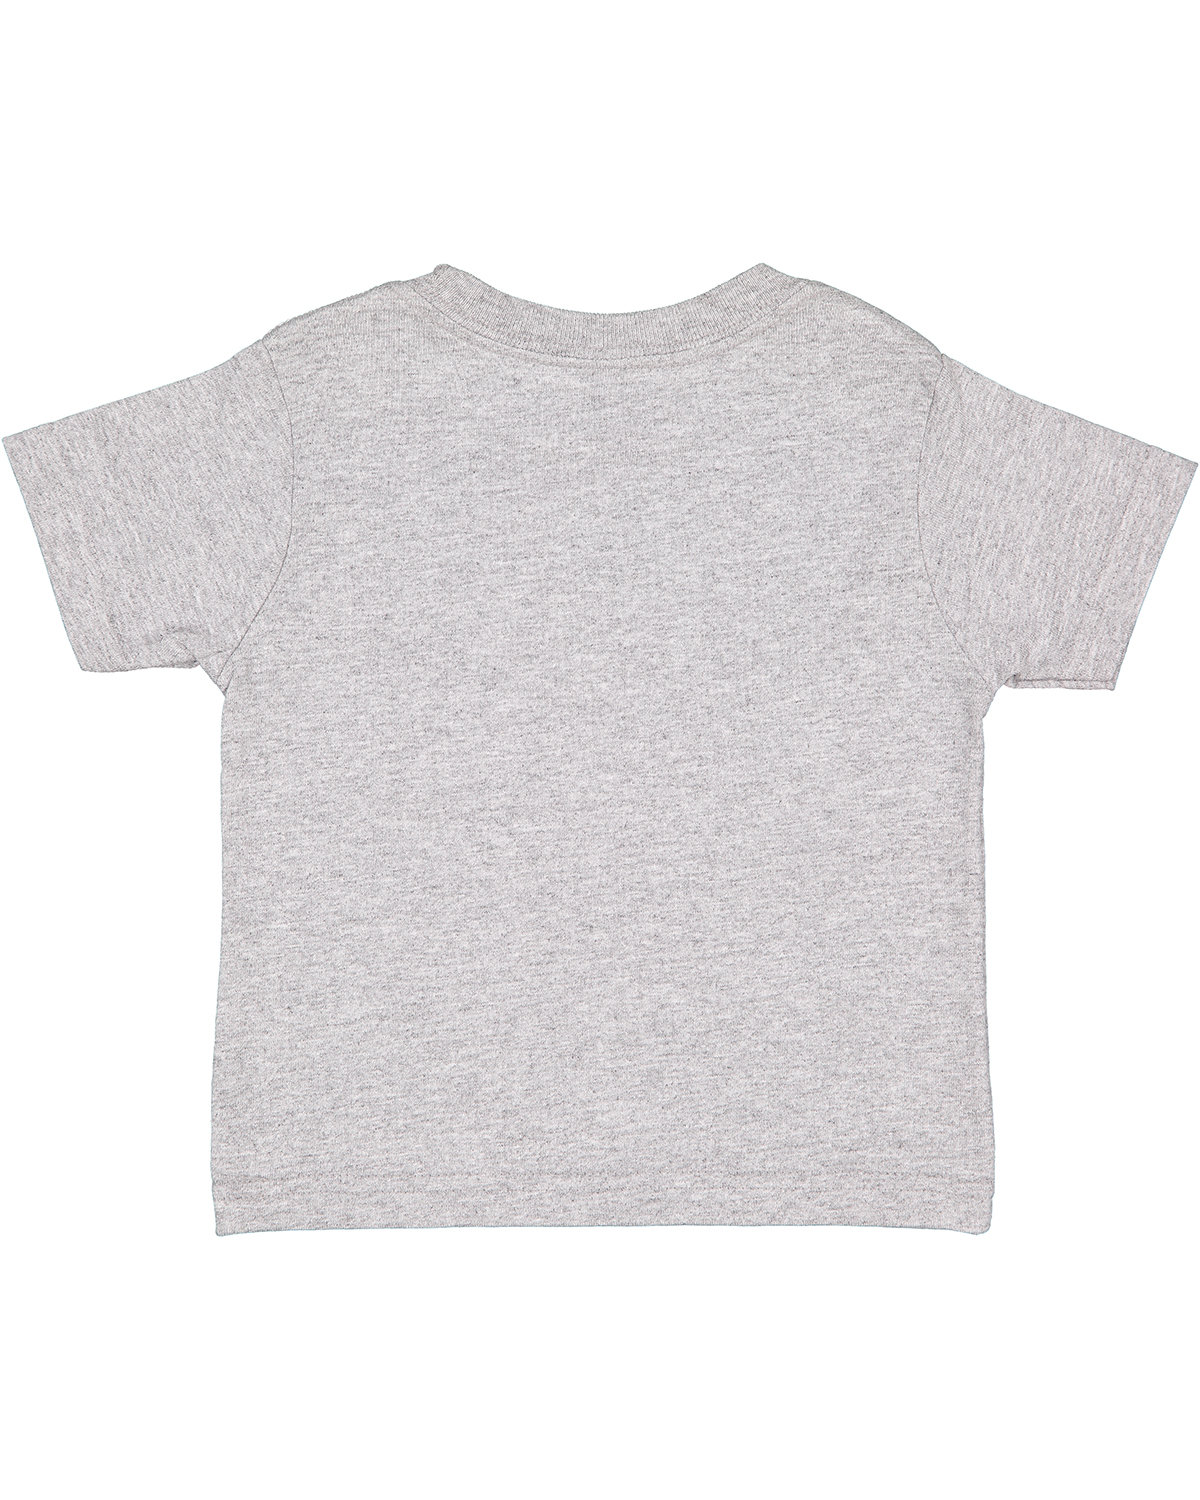 Rabbit Skins Toddler Cotton Jersey T-Shirt | alphabroder Canada